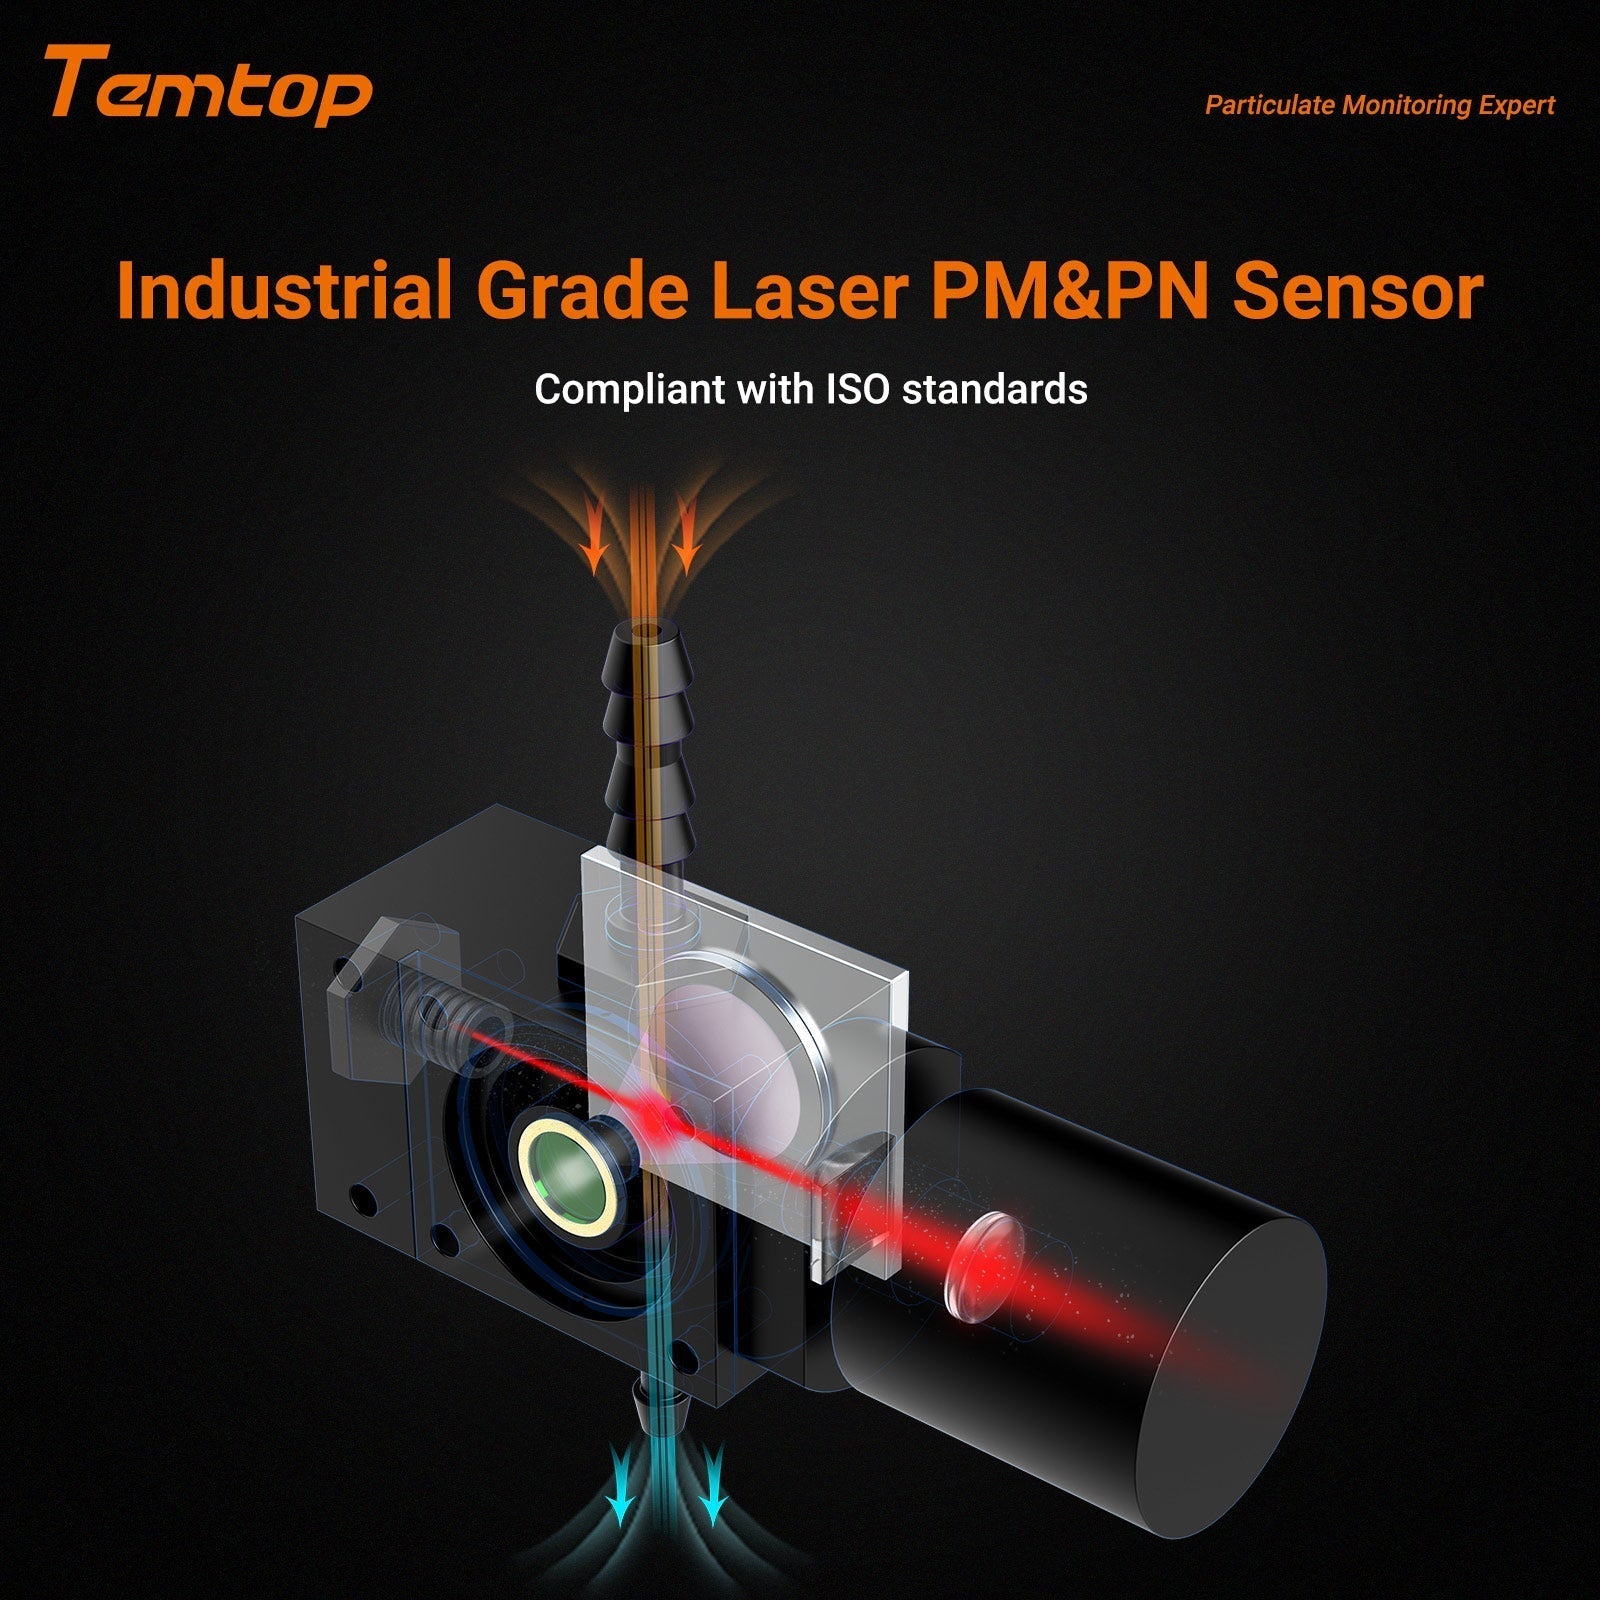 Temtop PMD 351 Aerosol Dust Monitor Handheld PM Sensor PM1.0, PM2.5, PM4.0, PM10,TSP - Temtop